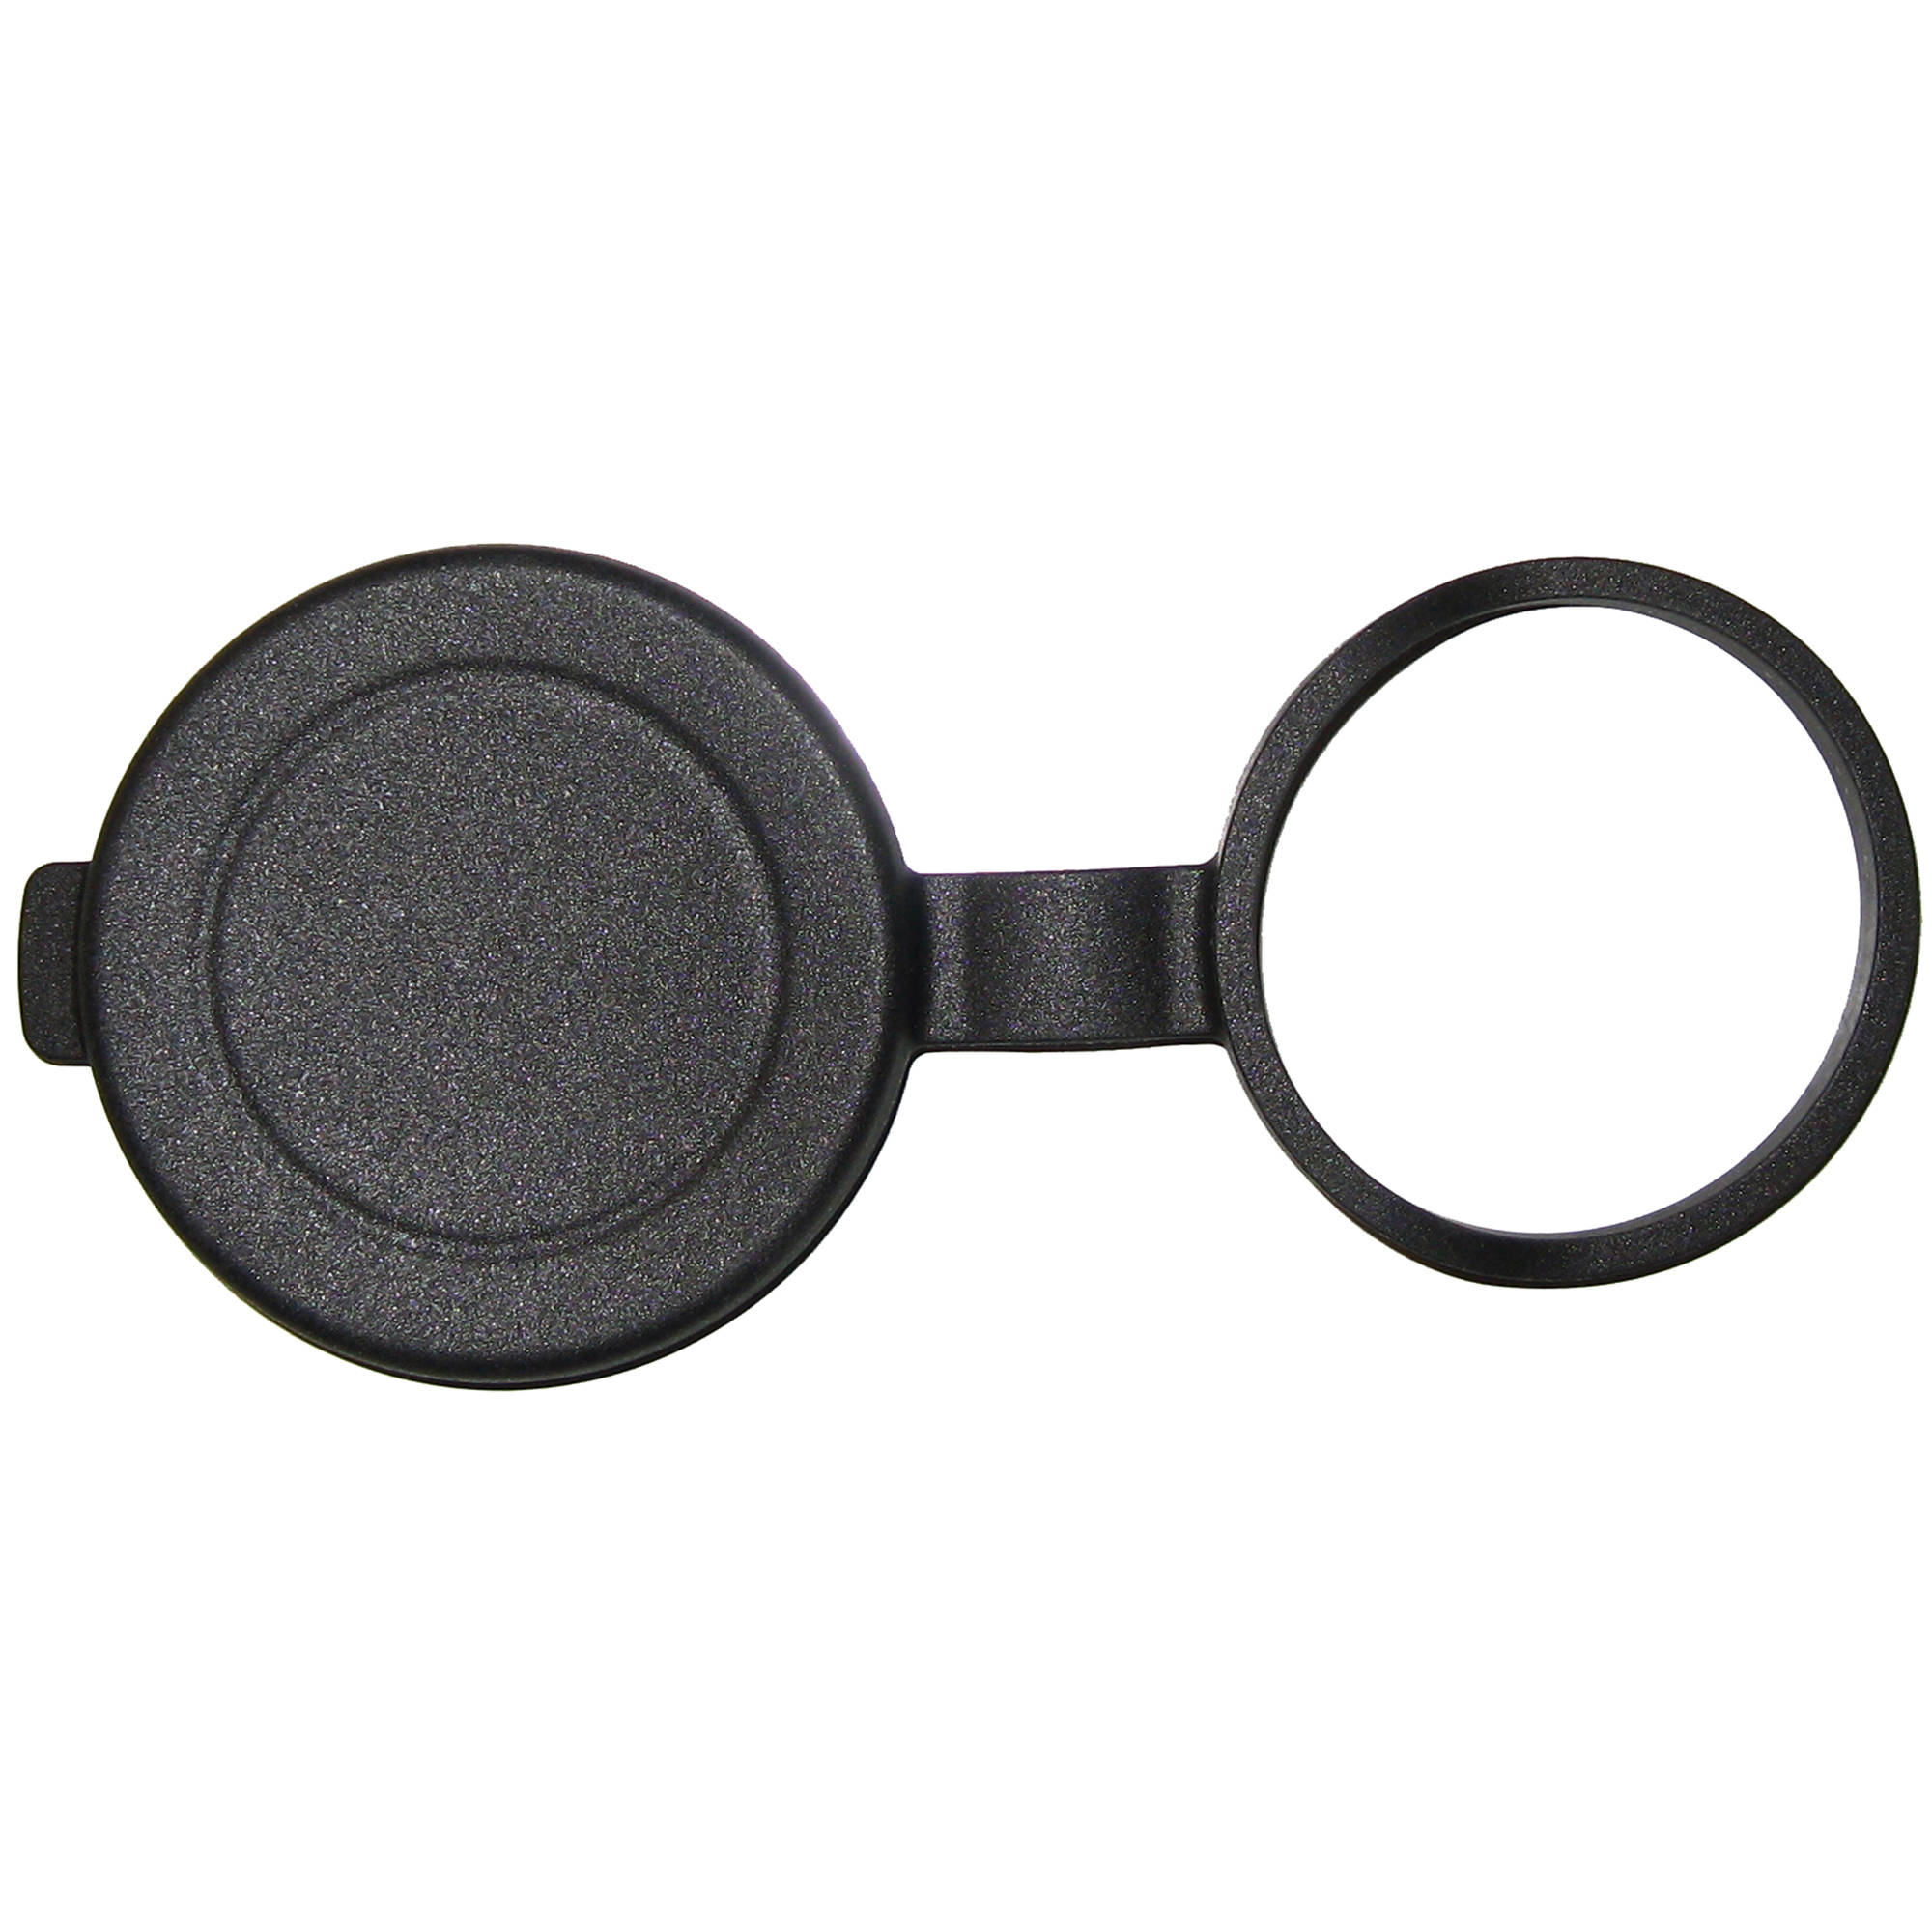 swarovski binocular lens caps